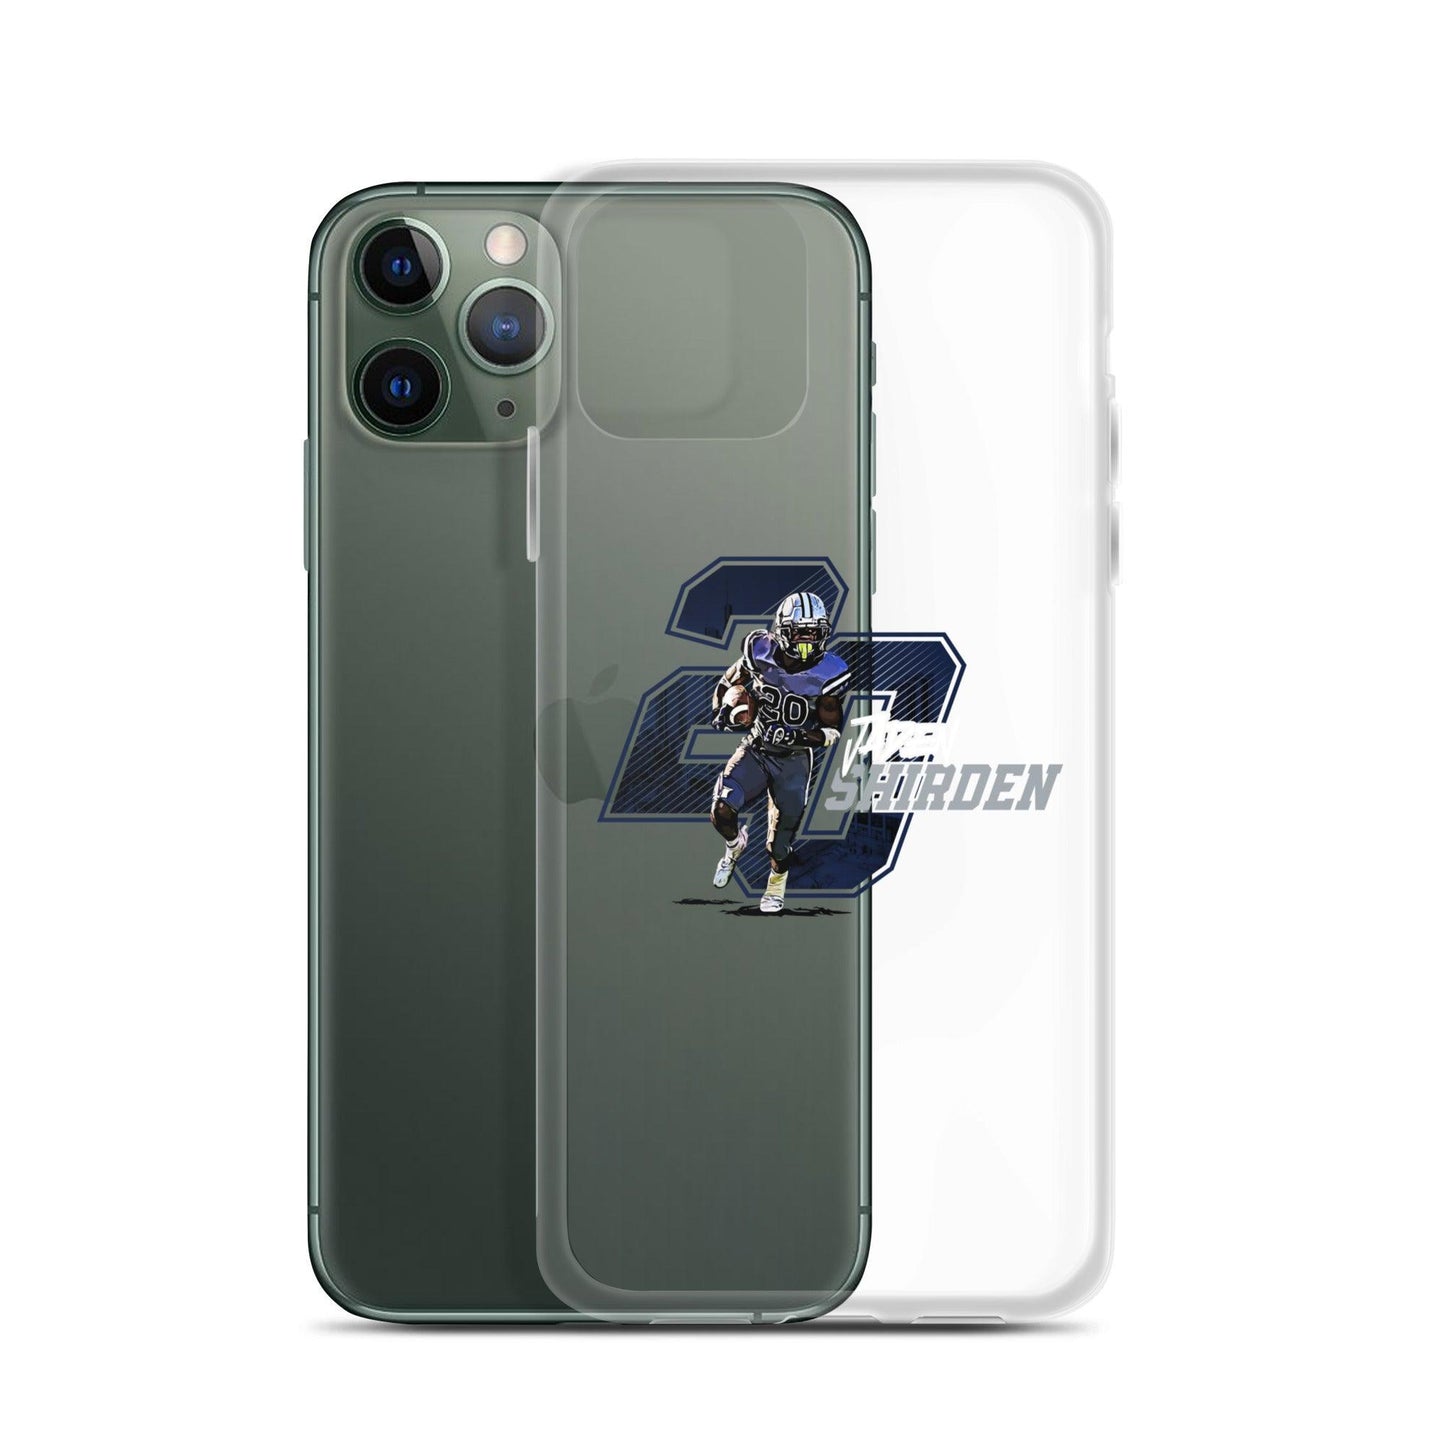 Jaden Shirden "Gameday" iPhone Case - Fan Arch